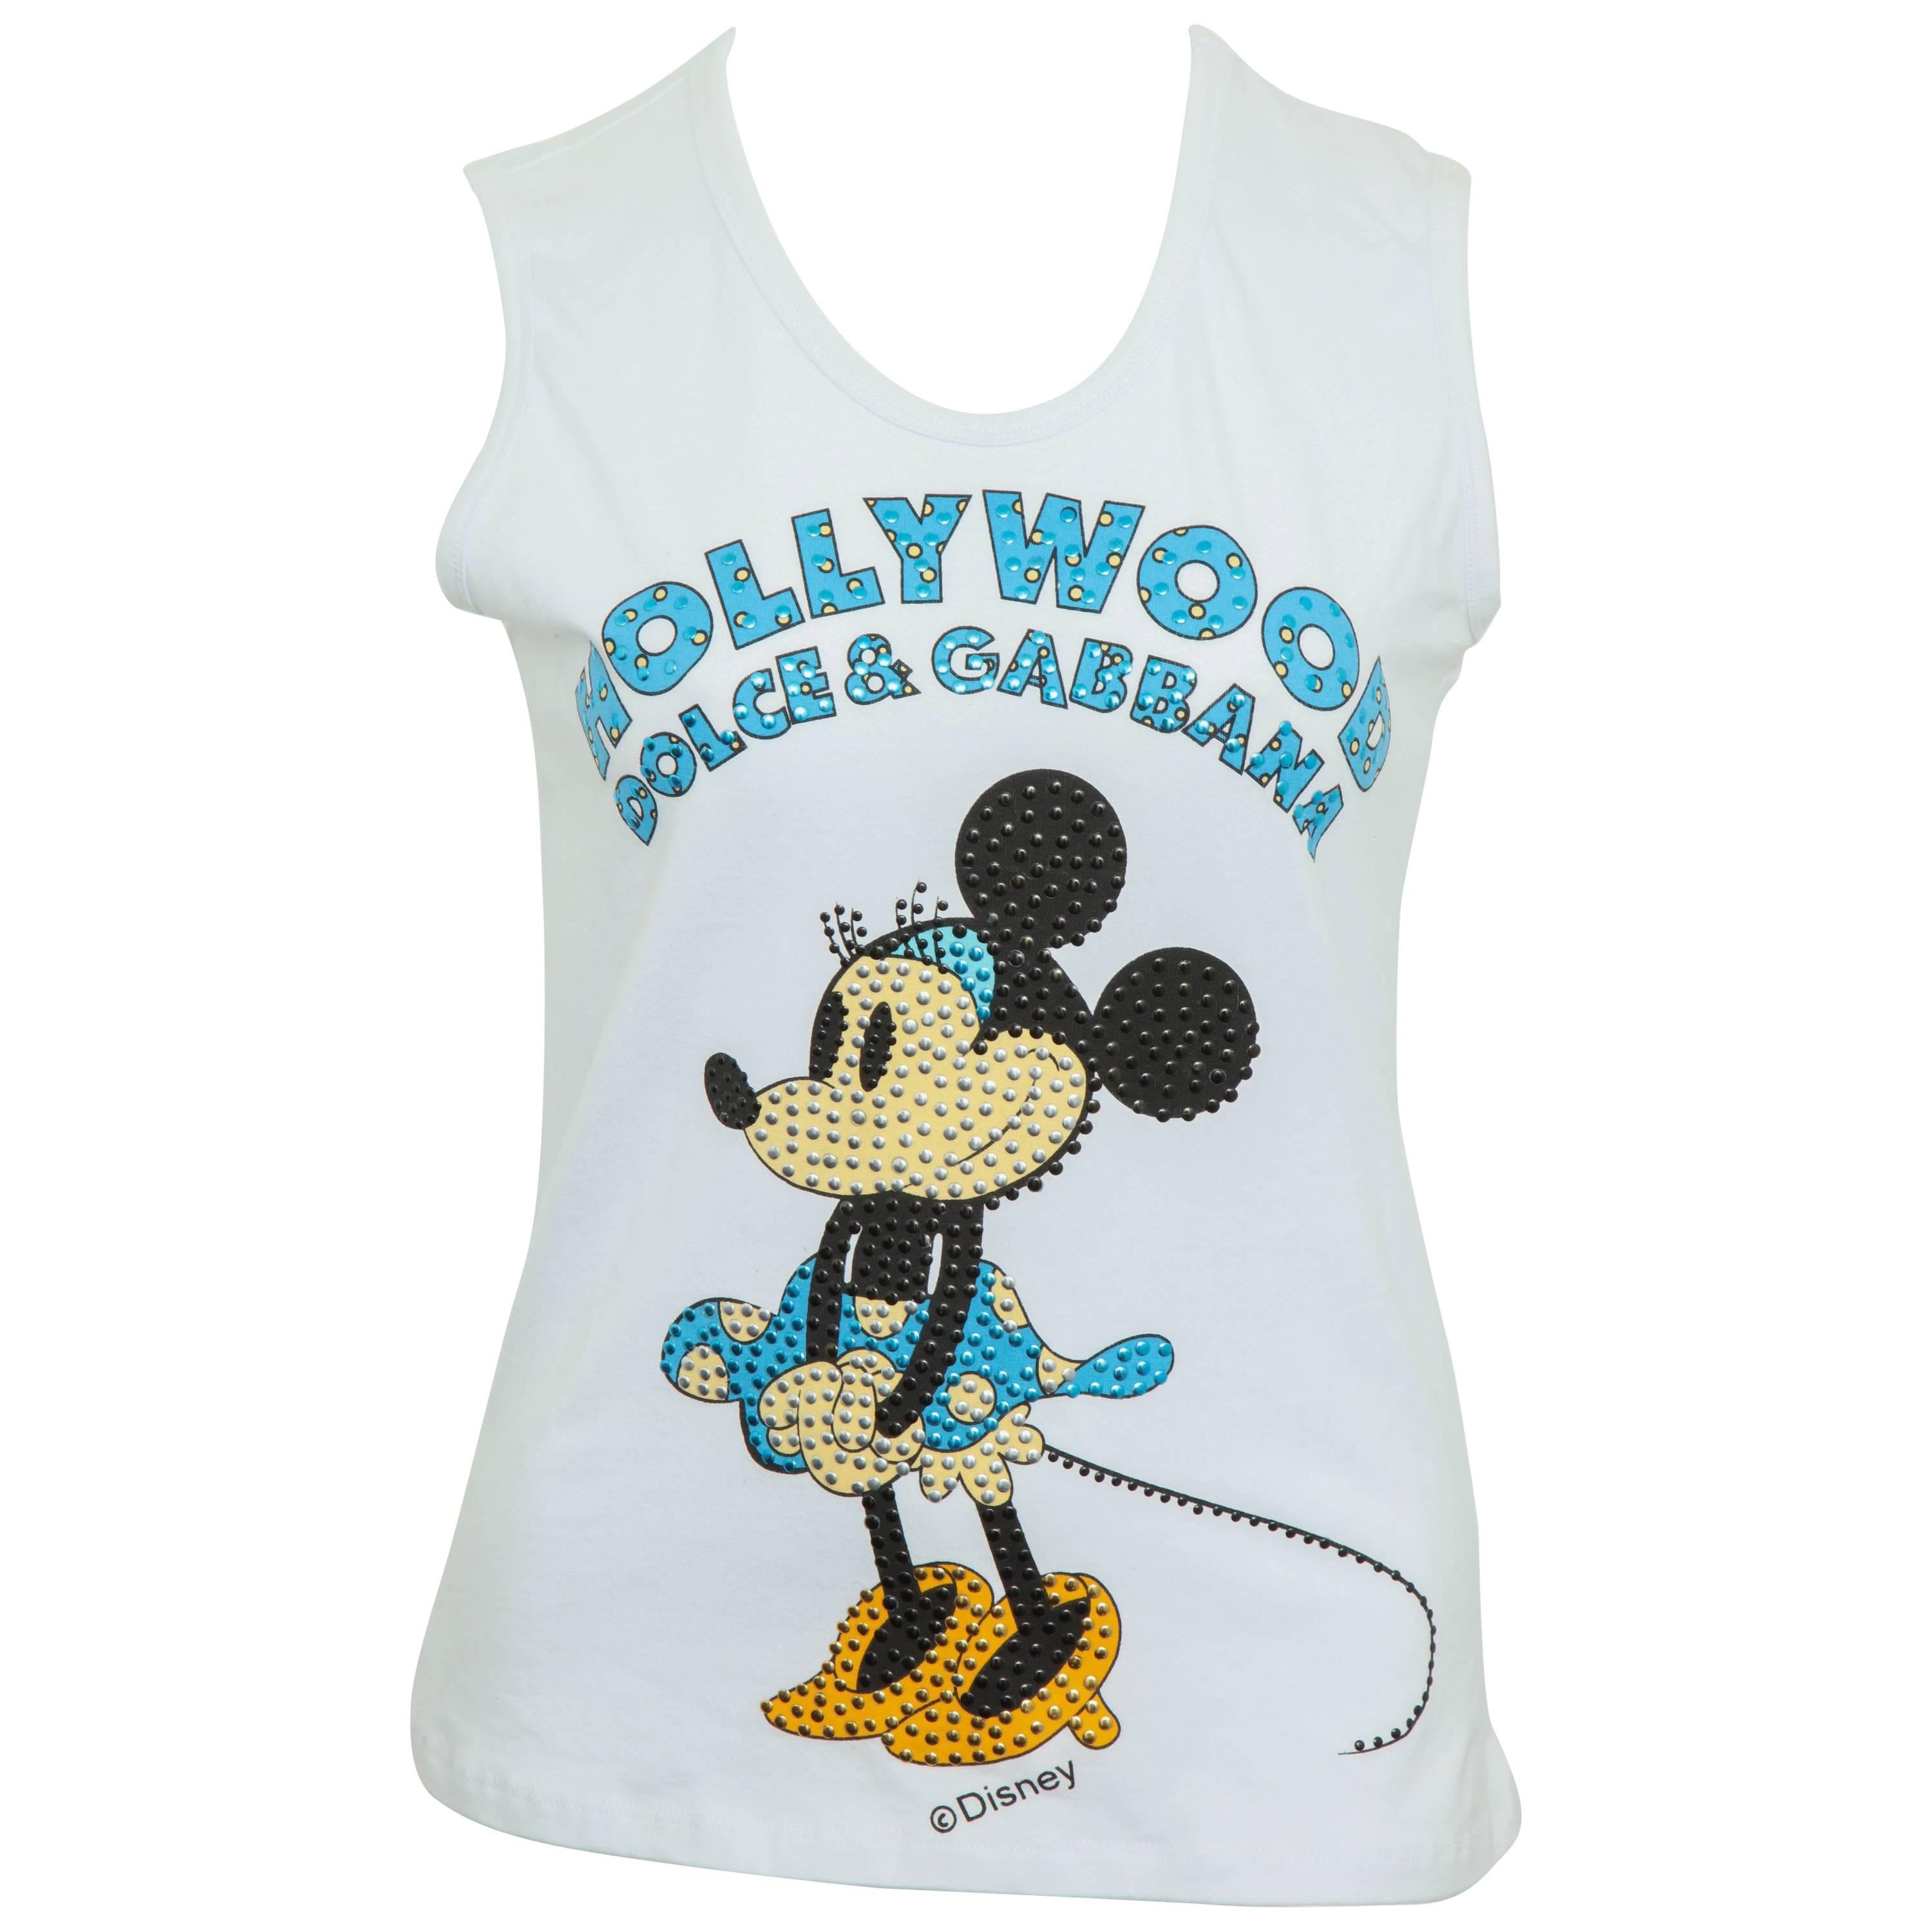 Dolce & Gabbana Disney Minnie Mouse Tank Top T-Shirt